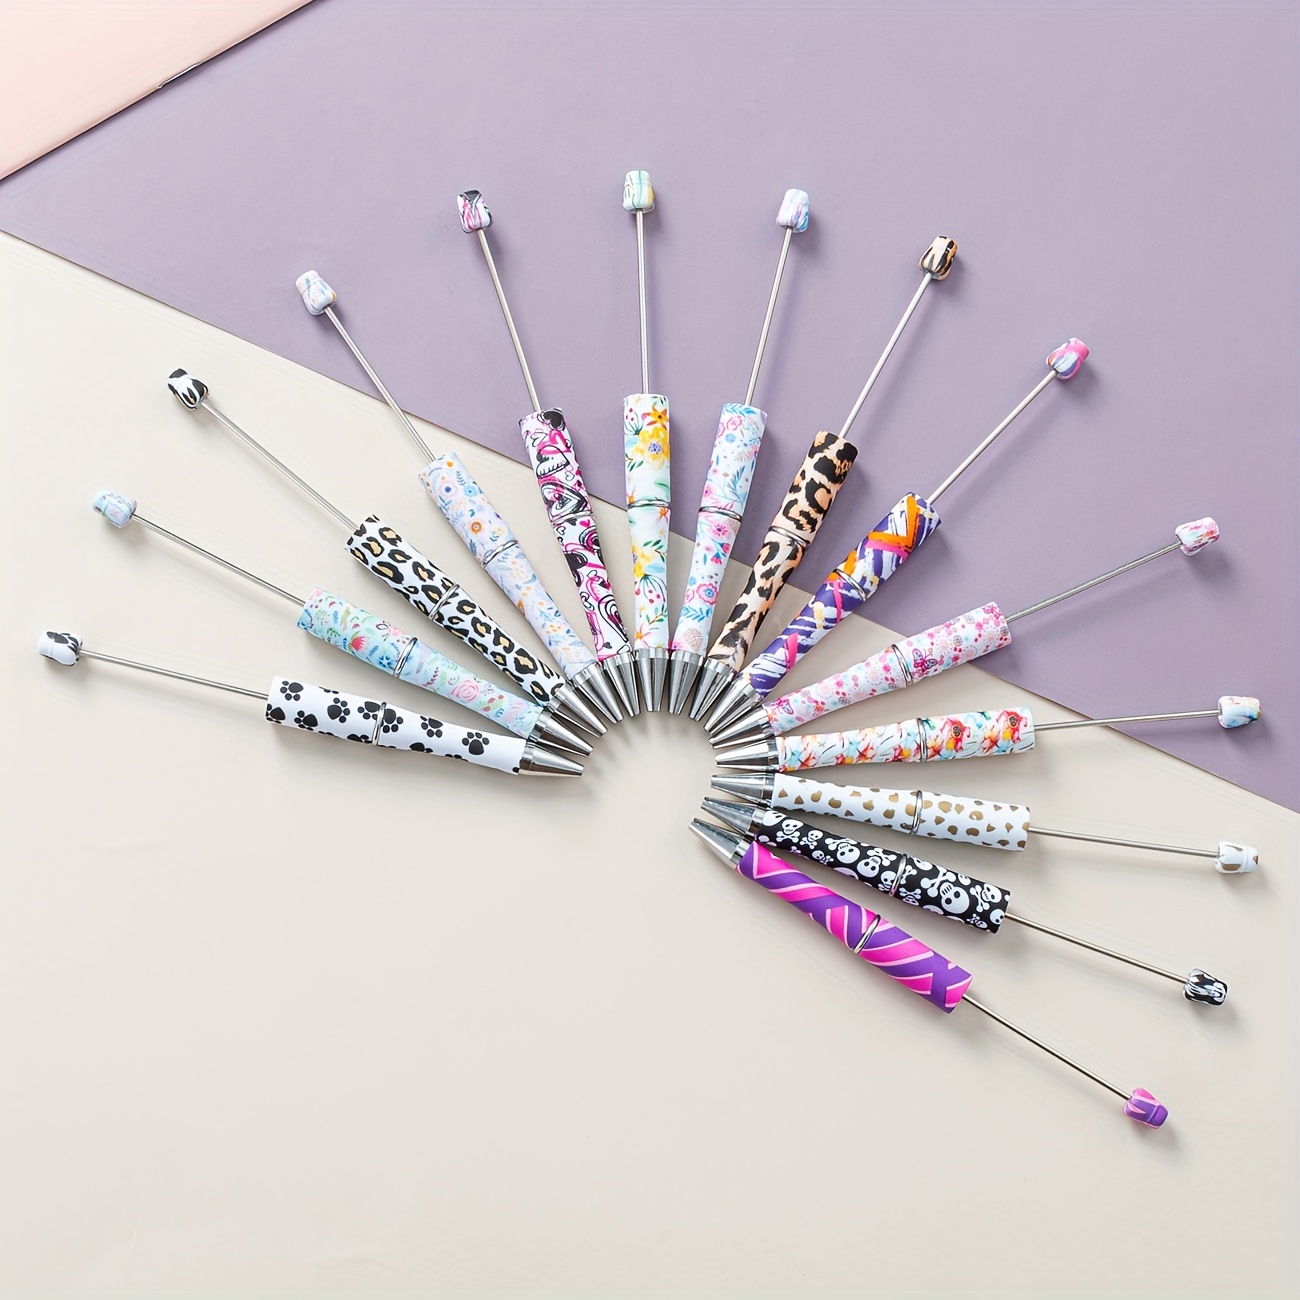 20pcs, 20 Colors Plastic Beadable Pens, Assorted Bead Pens For DIY